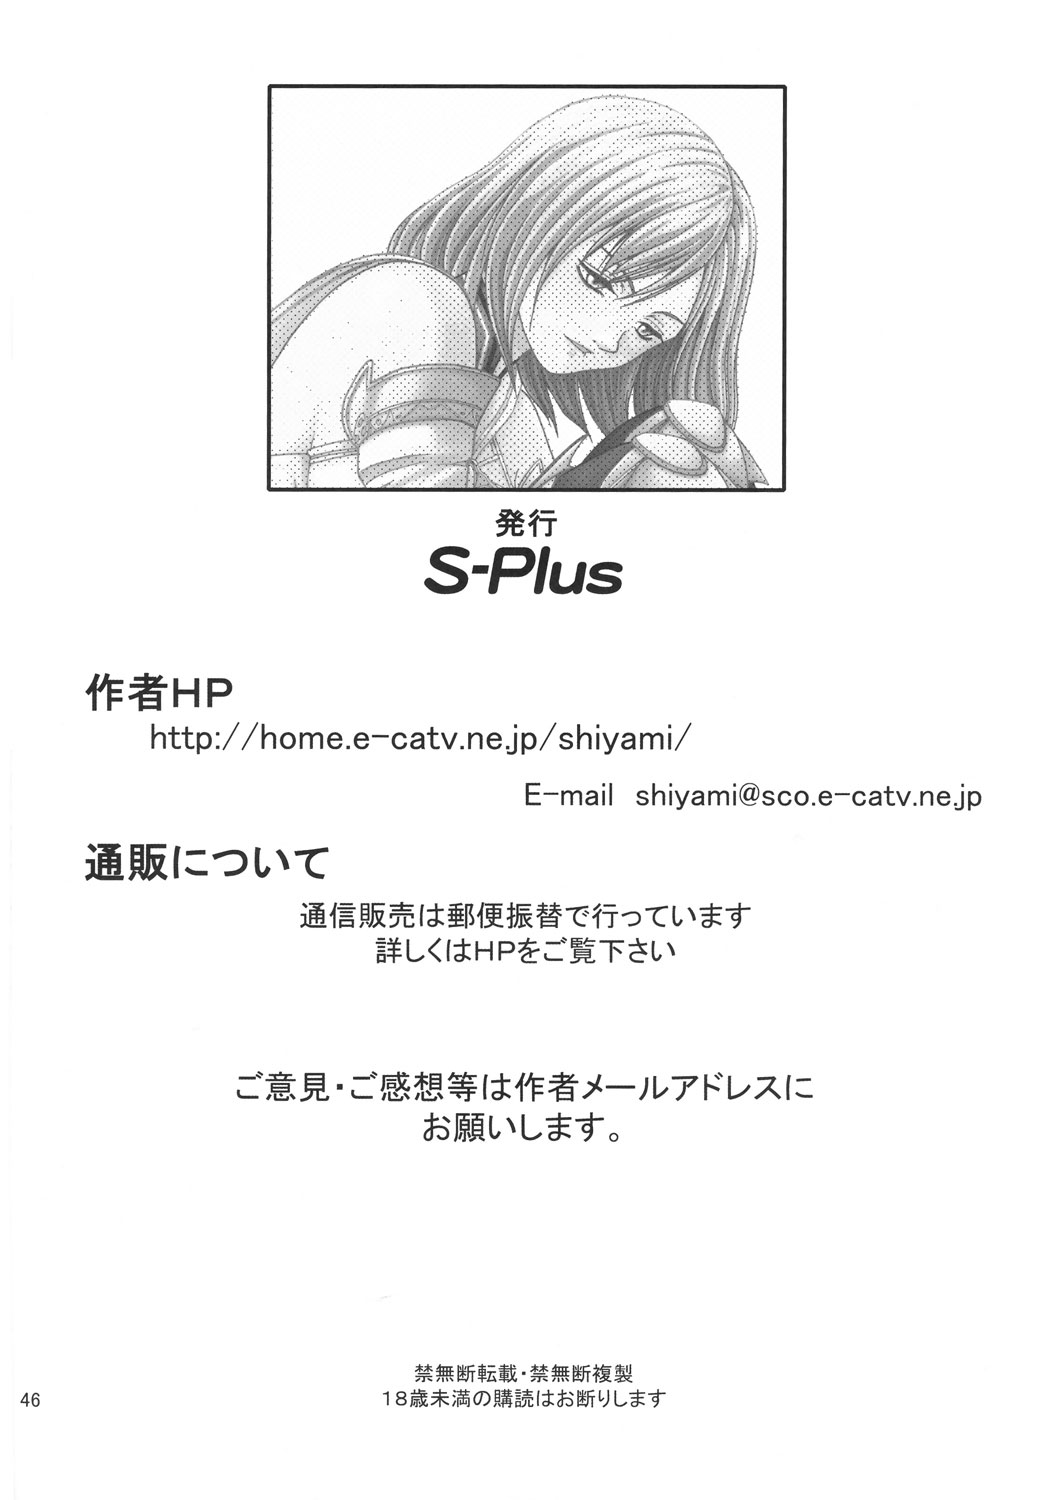 [S-Plus (SHIYAMI)] 帝国の思惑 (ファイナルファンタジー XII)